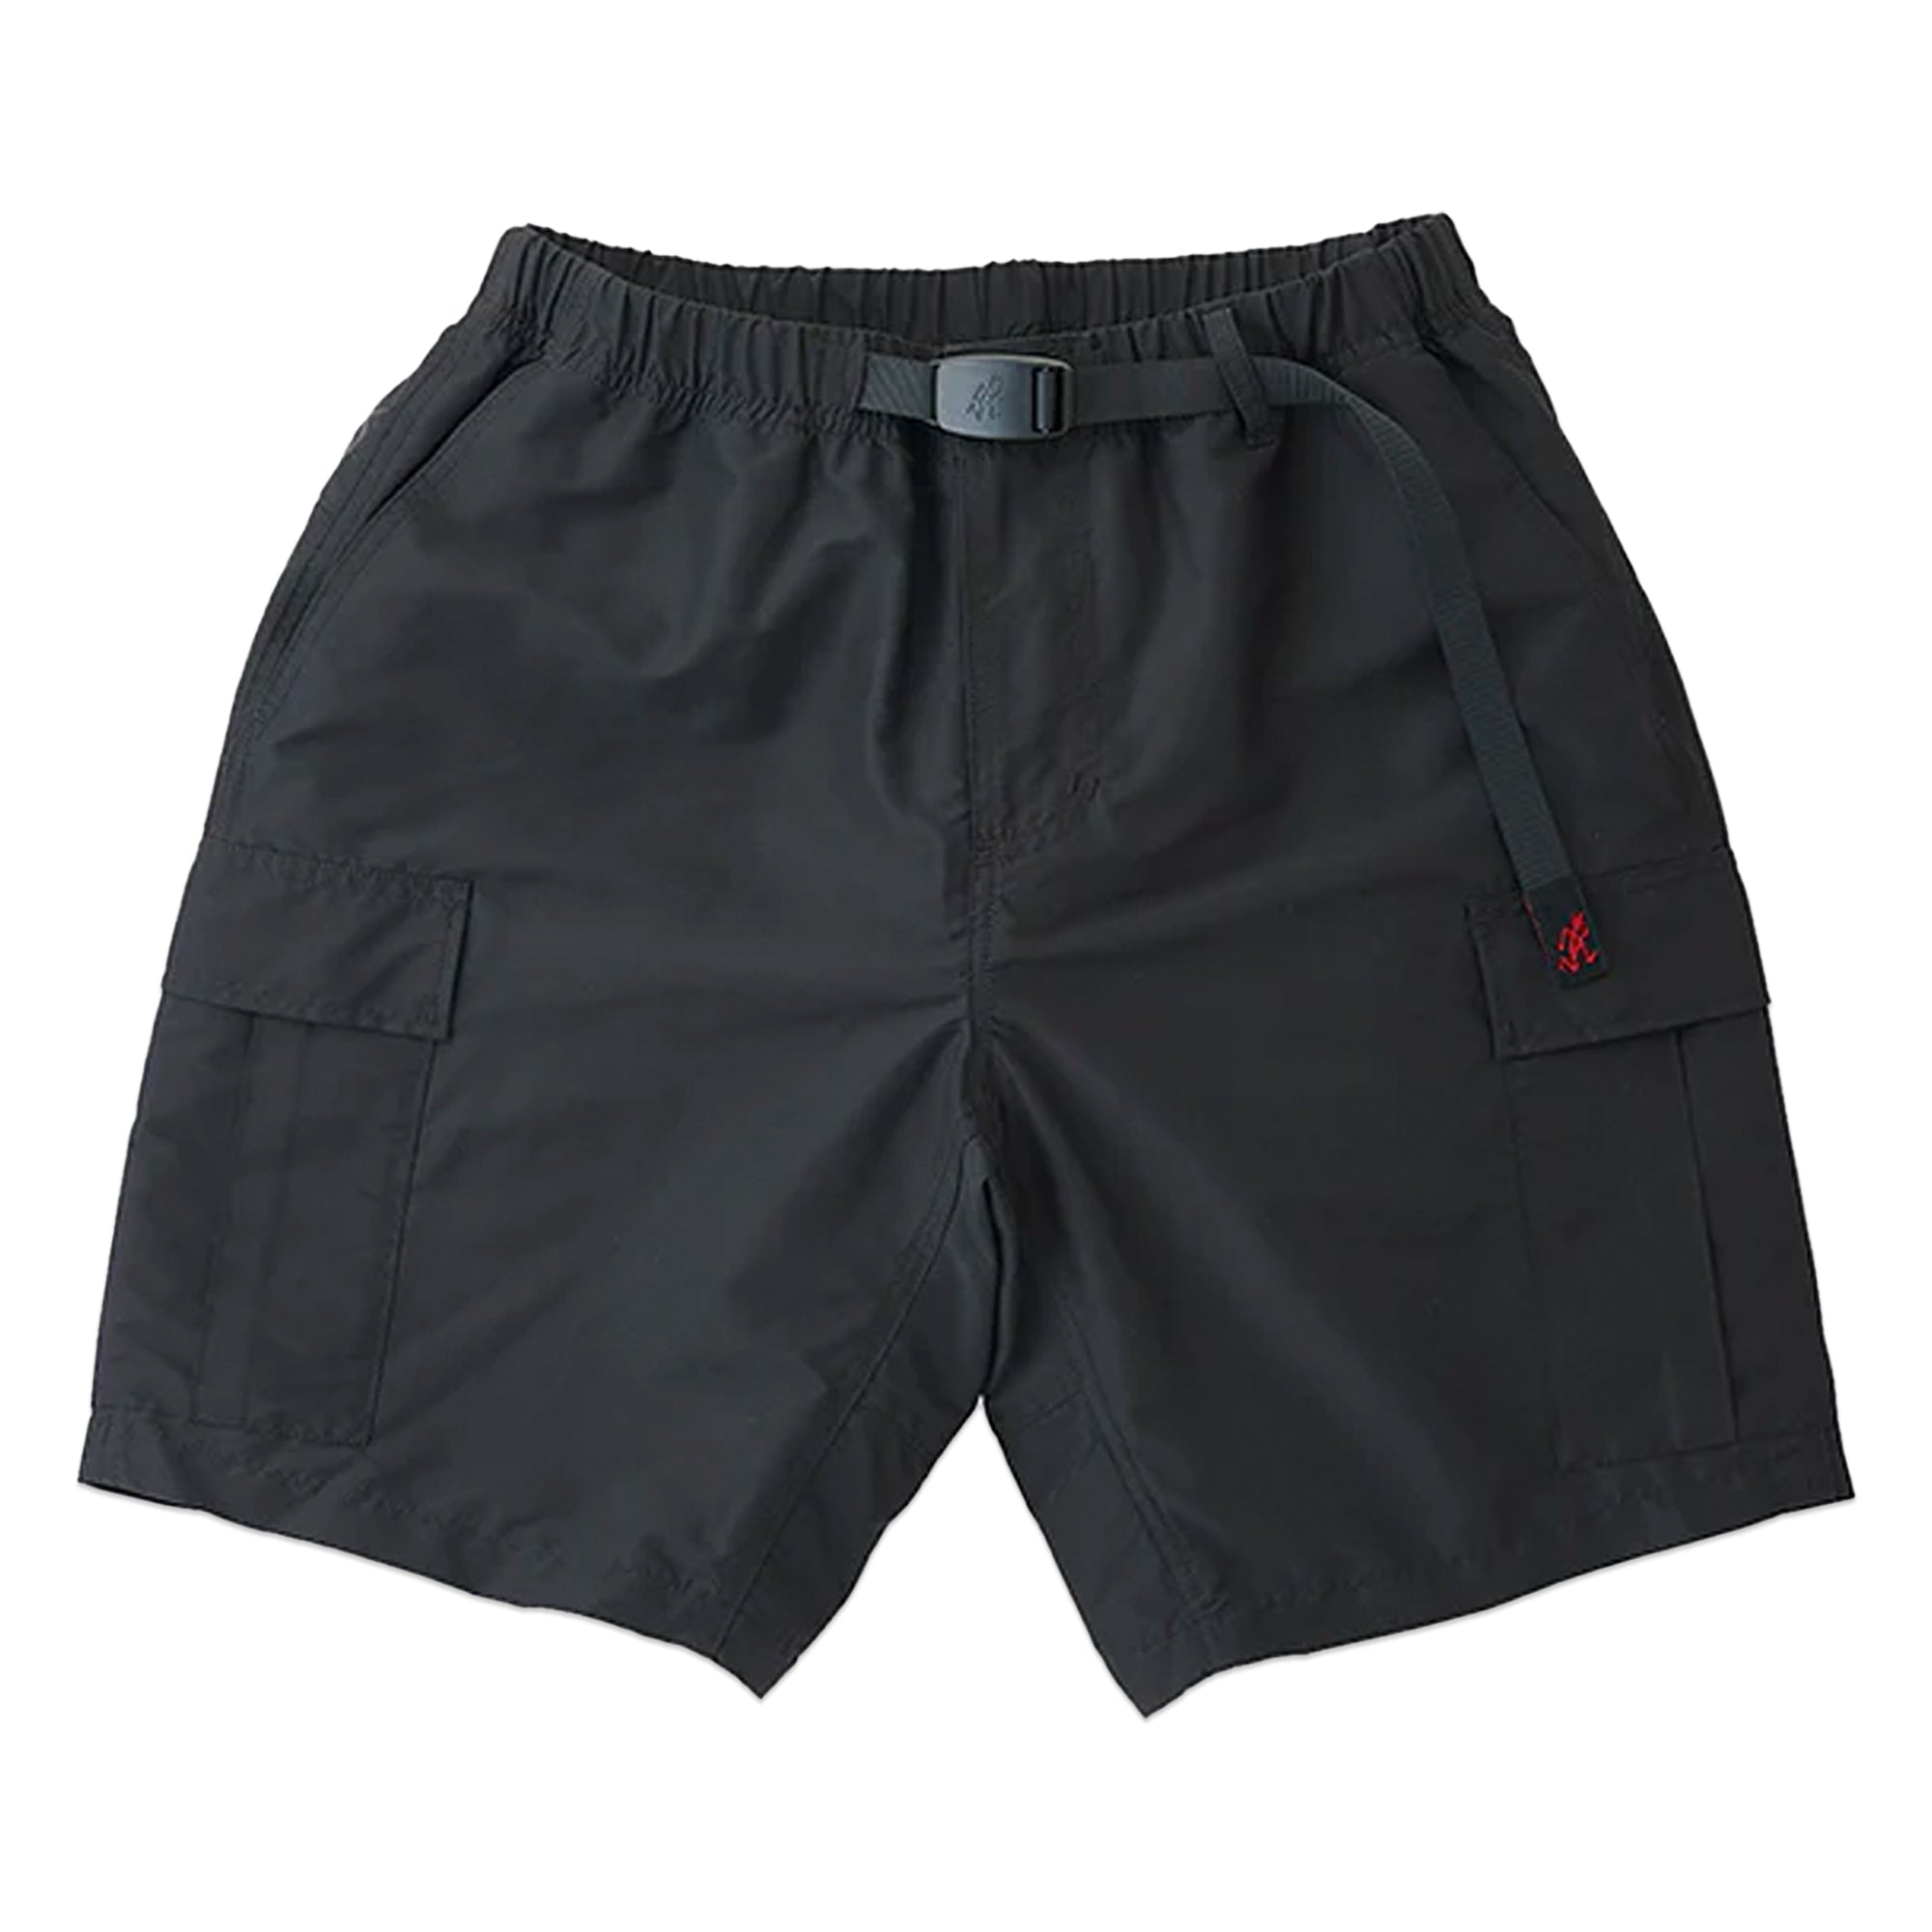 Gramicci Shell Cargo Shorts - Black